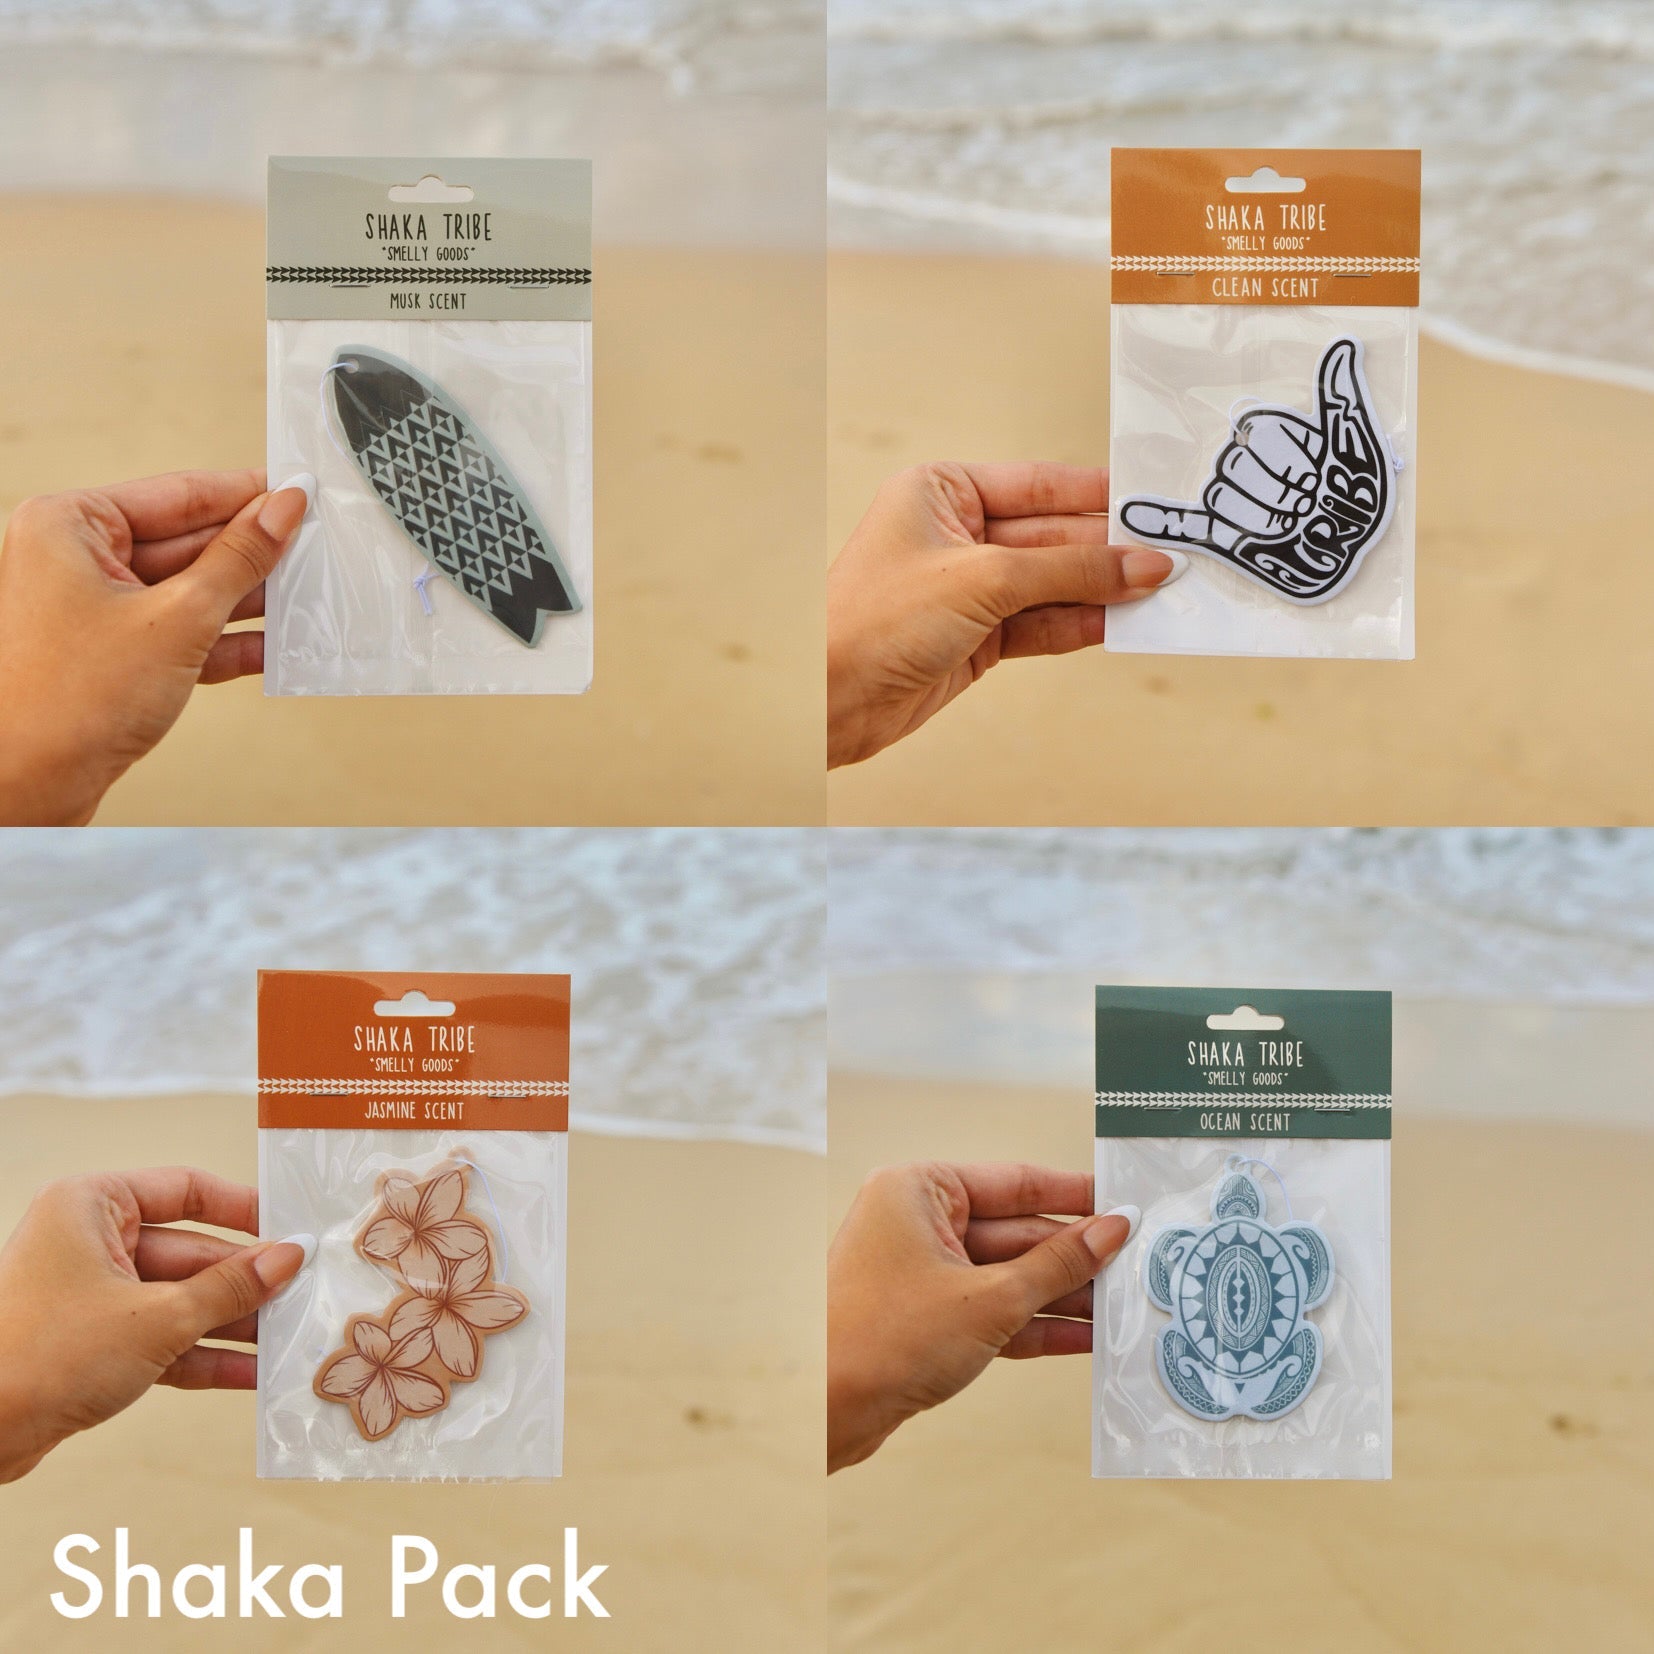 Shaka Pack - "Smelly Goods" | Car Fresheners